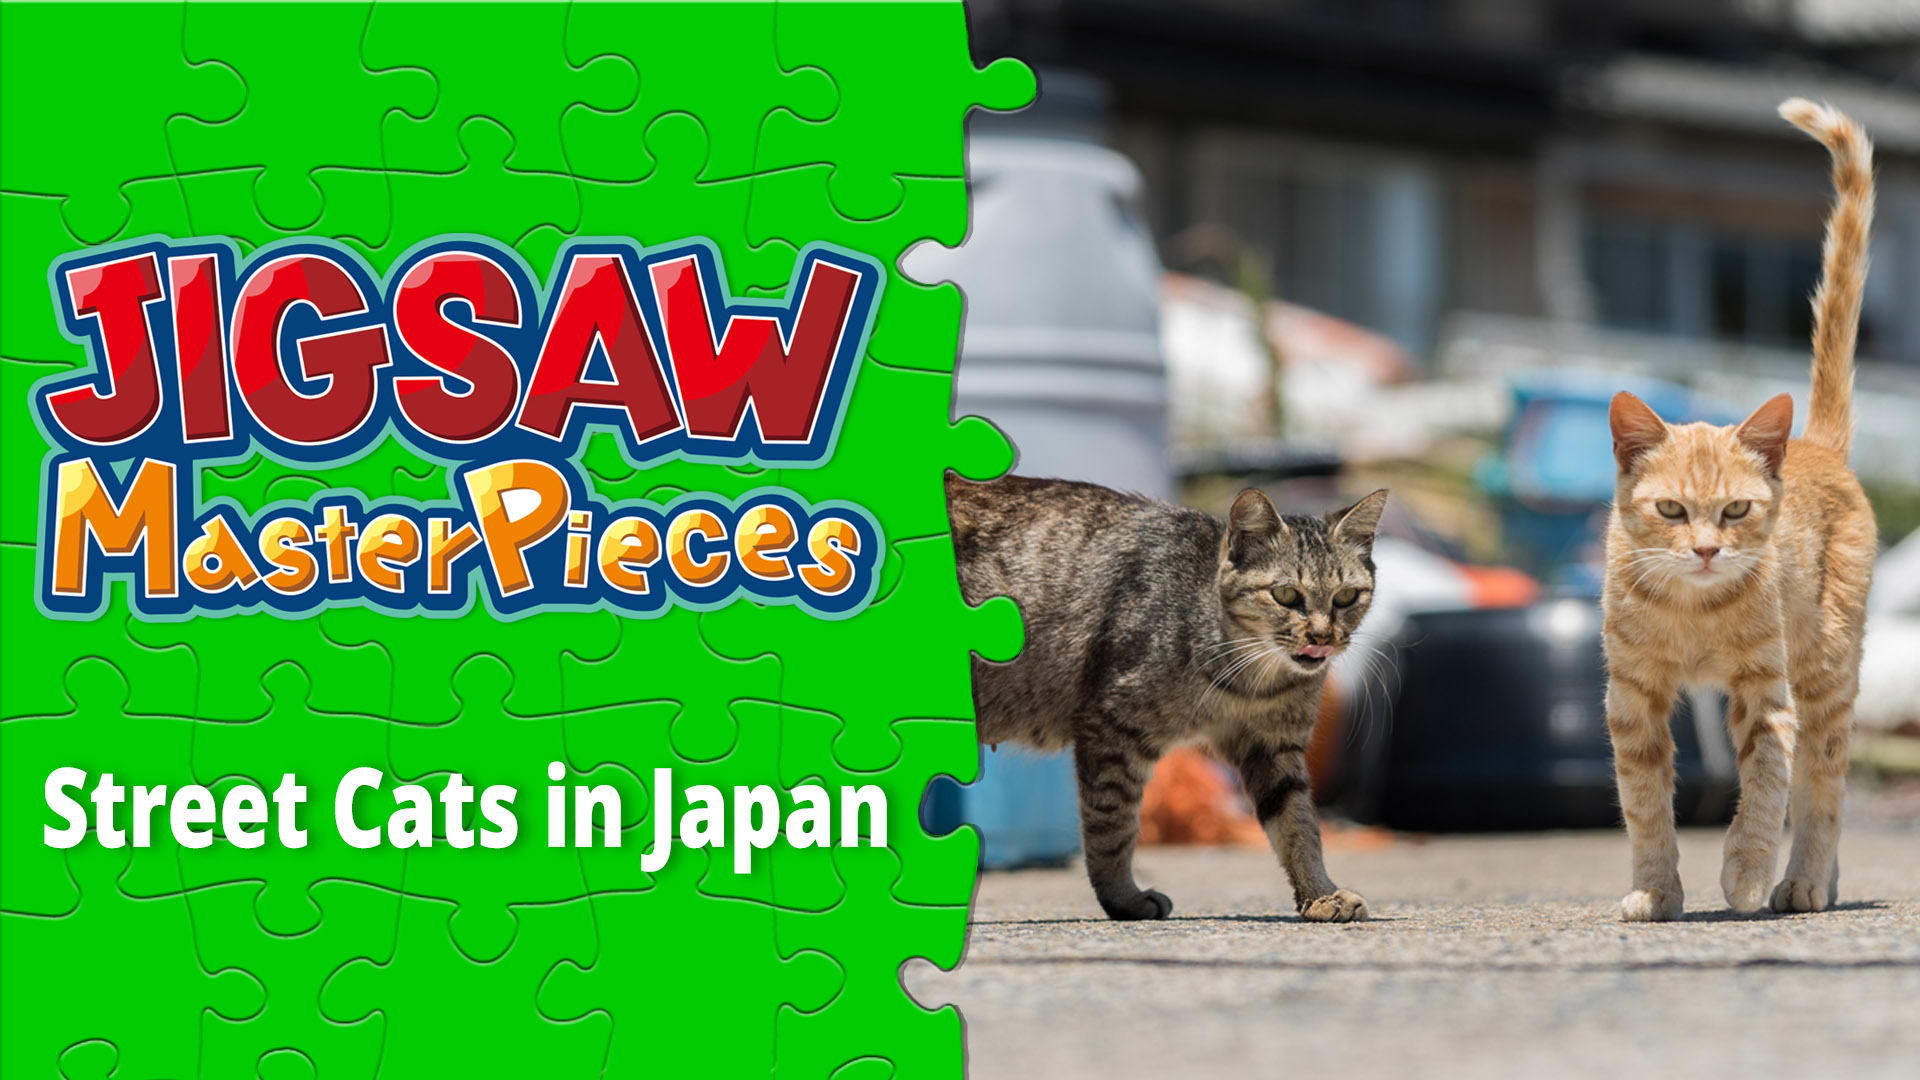 Street Cats in Japan